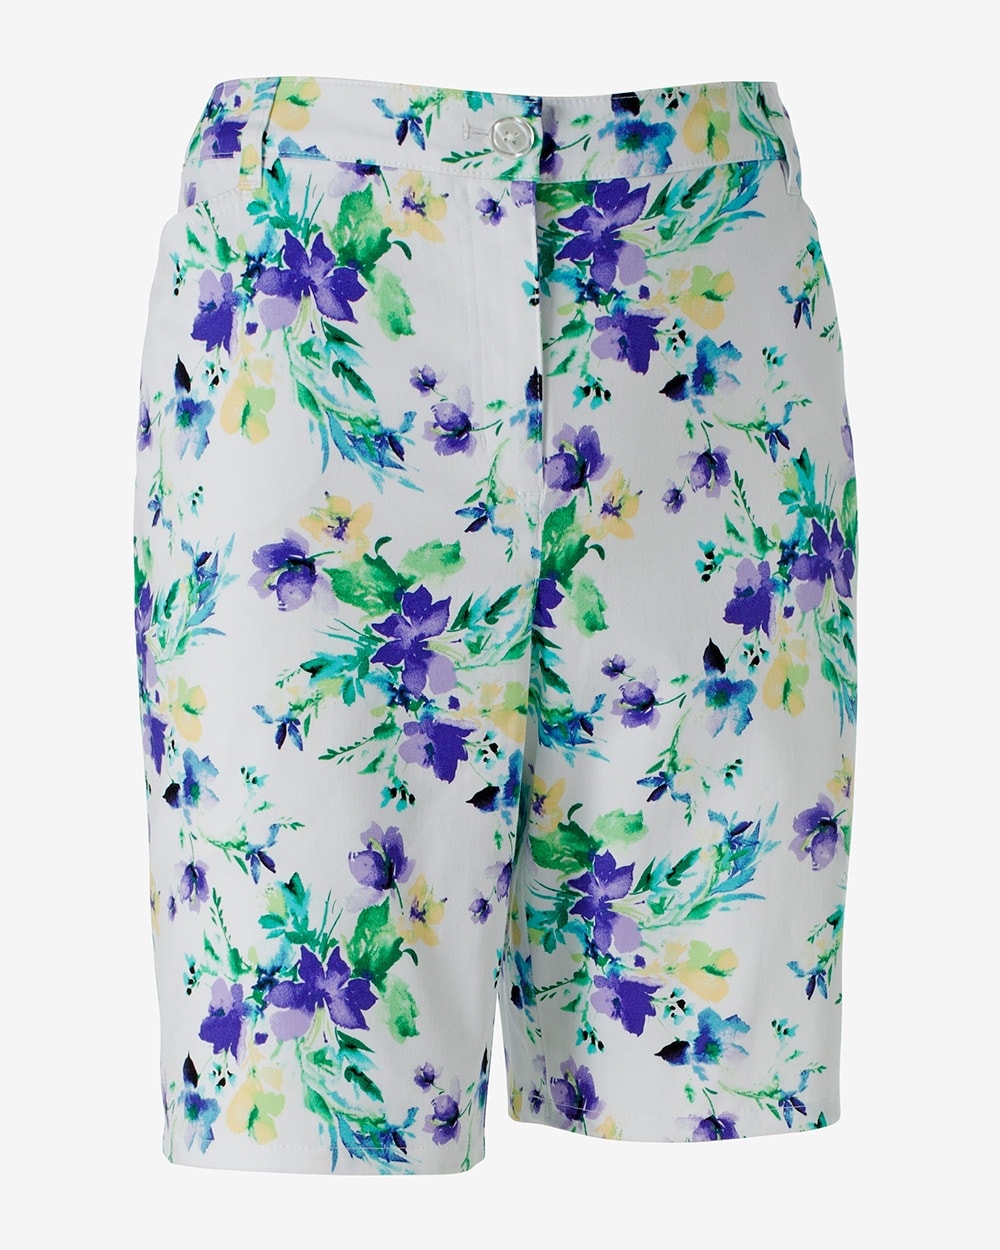 Flourishing Garden Chino Shorts - 9.5 Inch Inseam